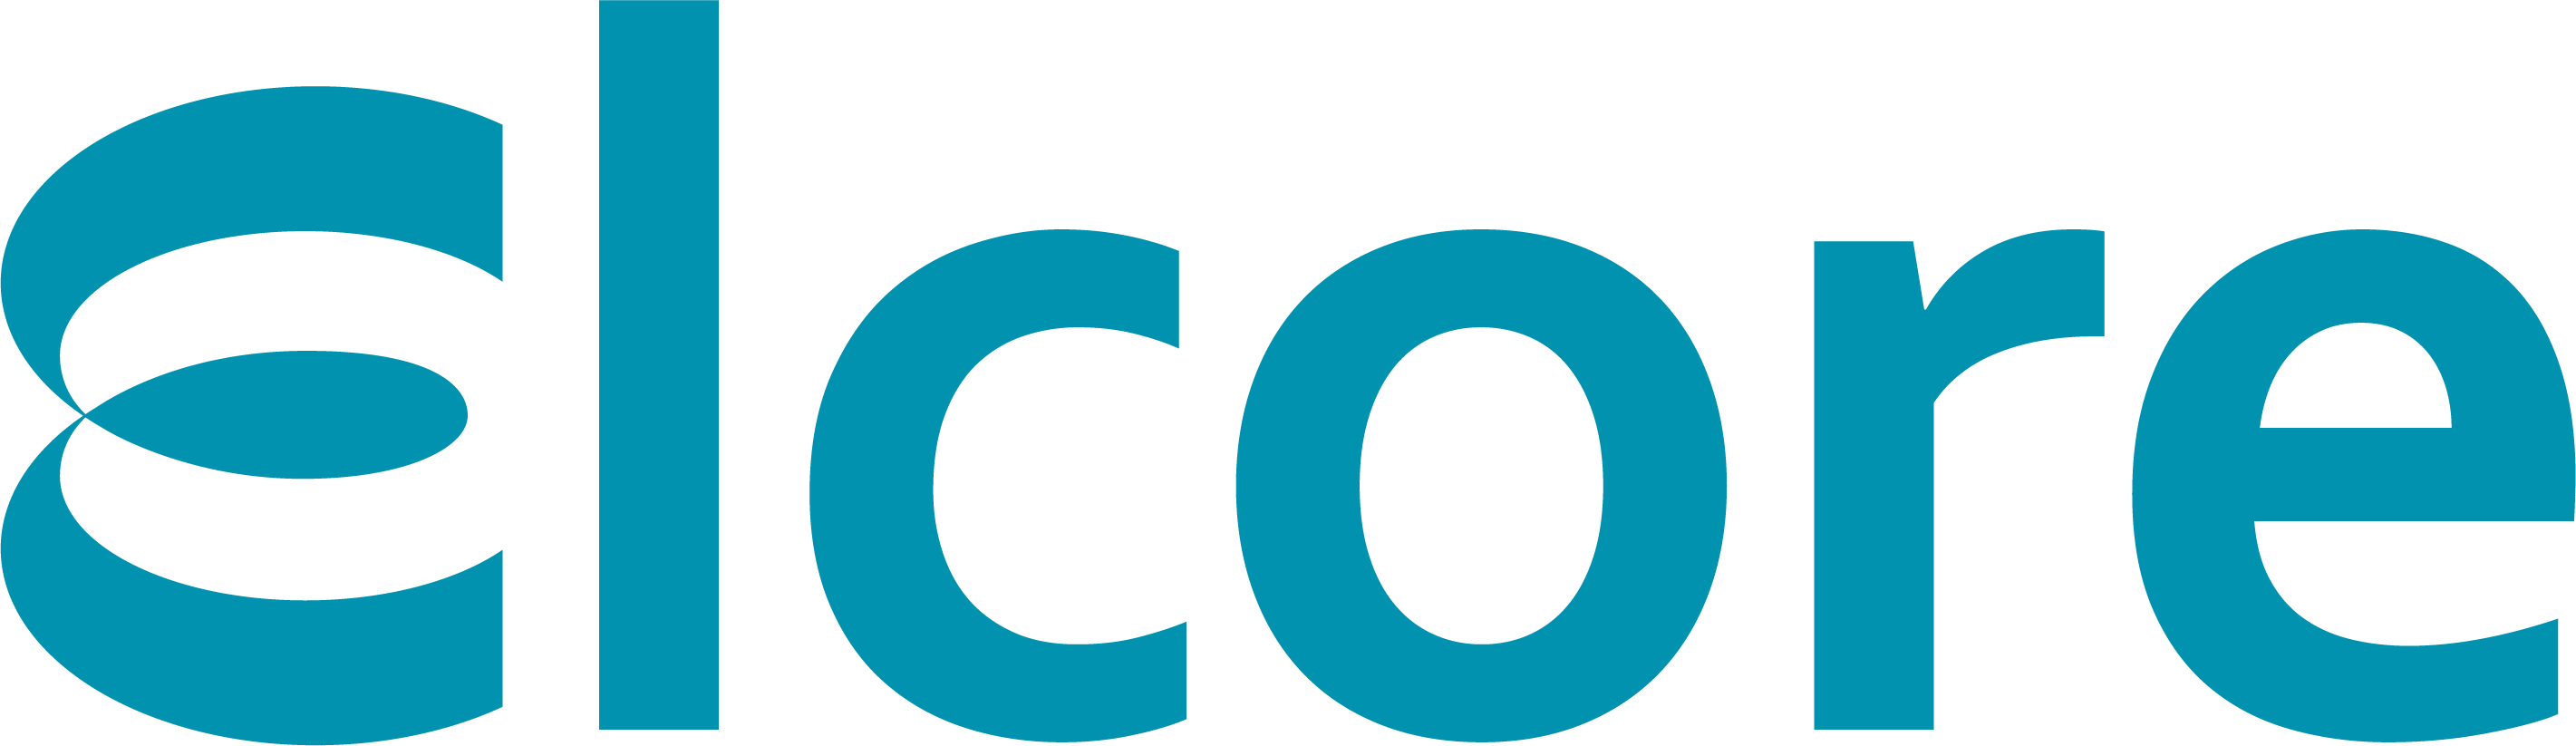 ELCORE Group logo